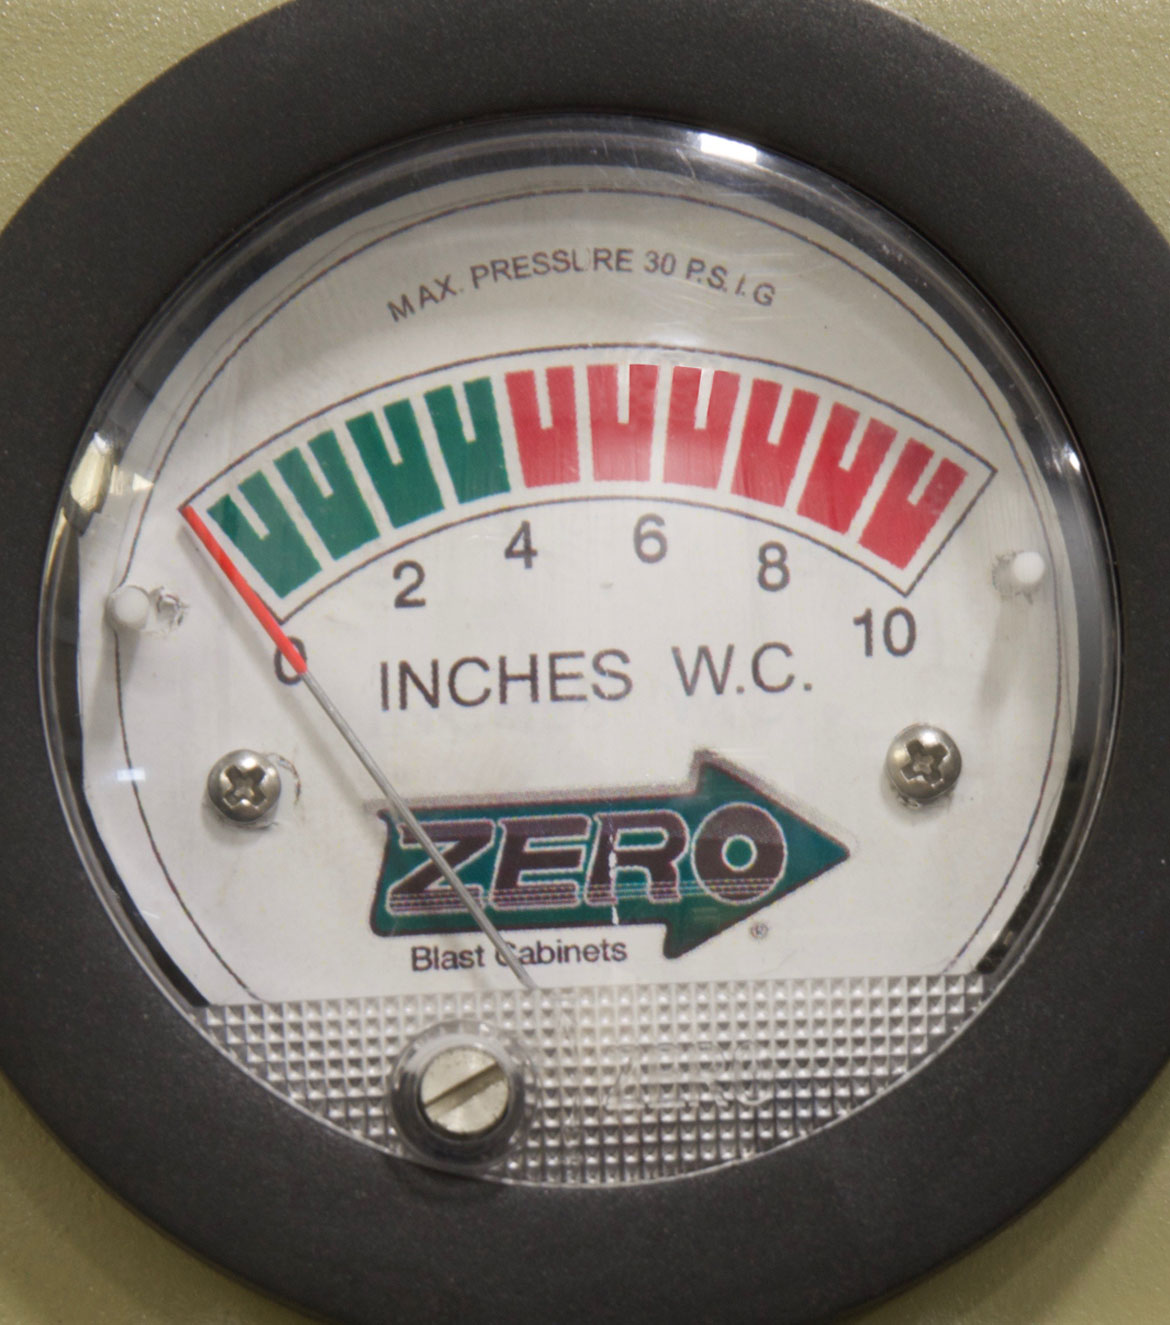 Close up of pressure gauge